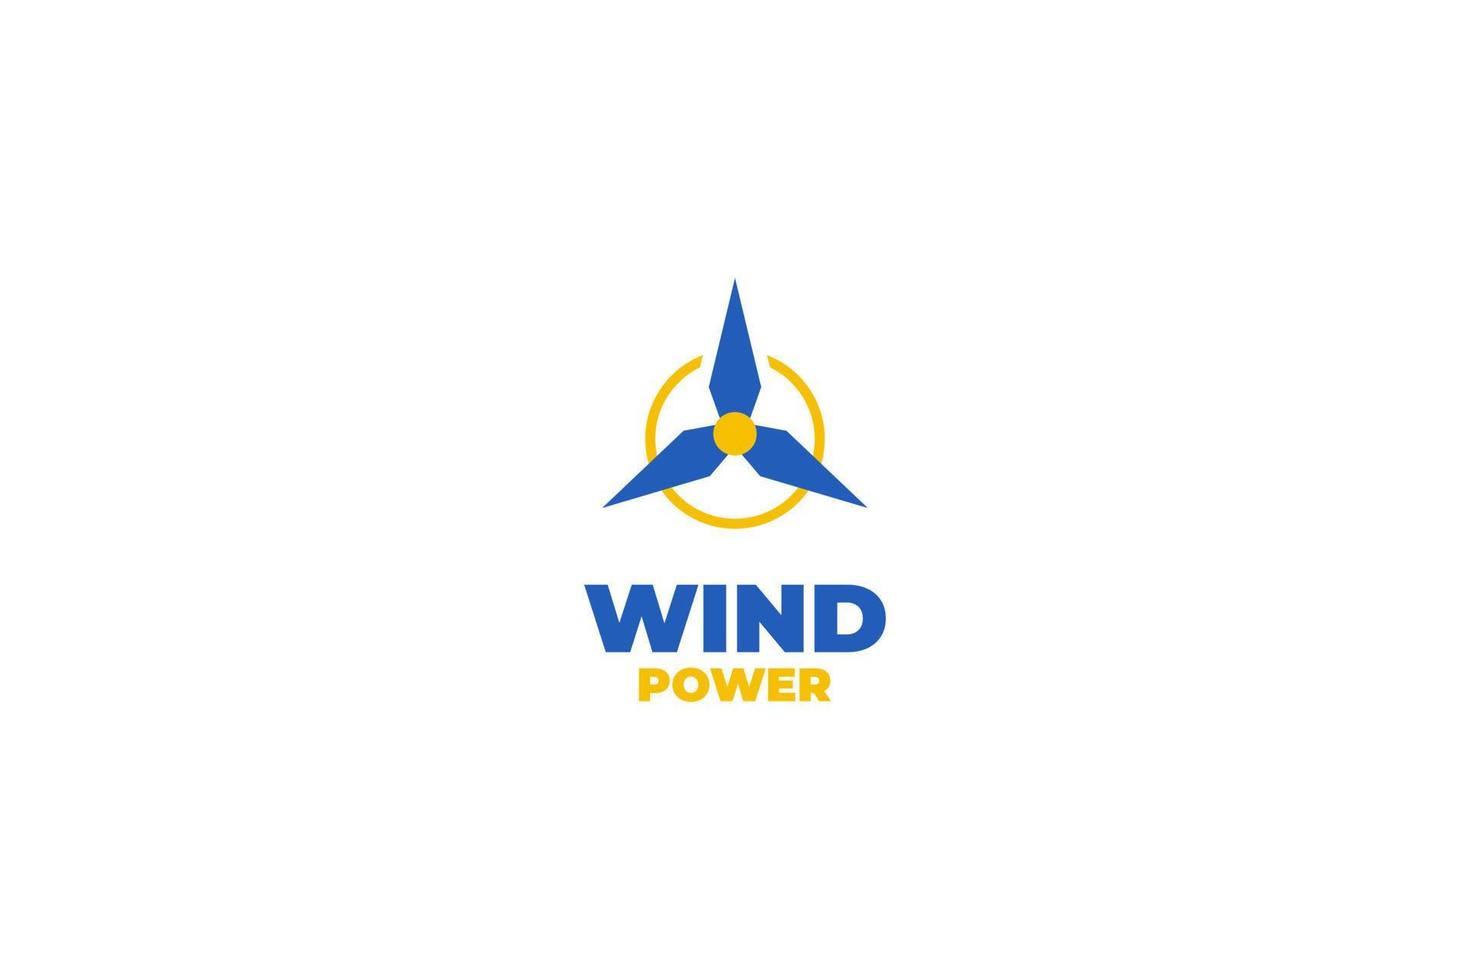 Wind power logo design vector illustration idea